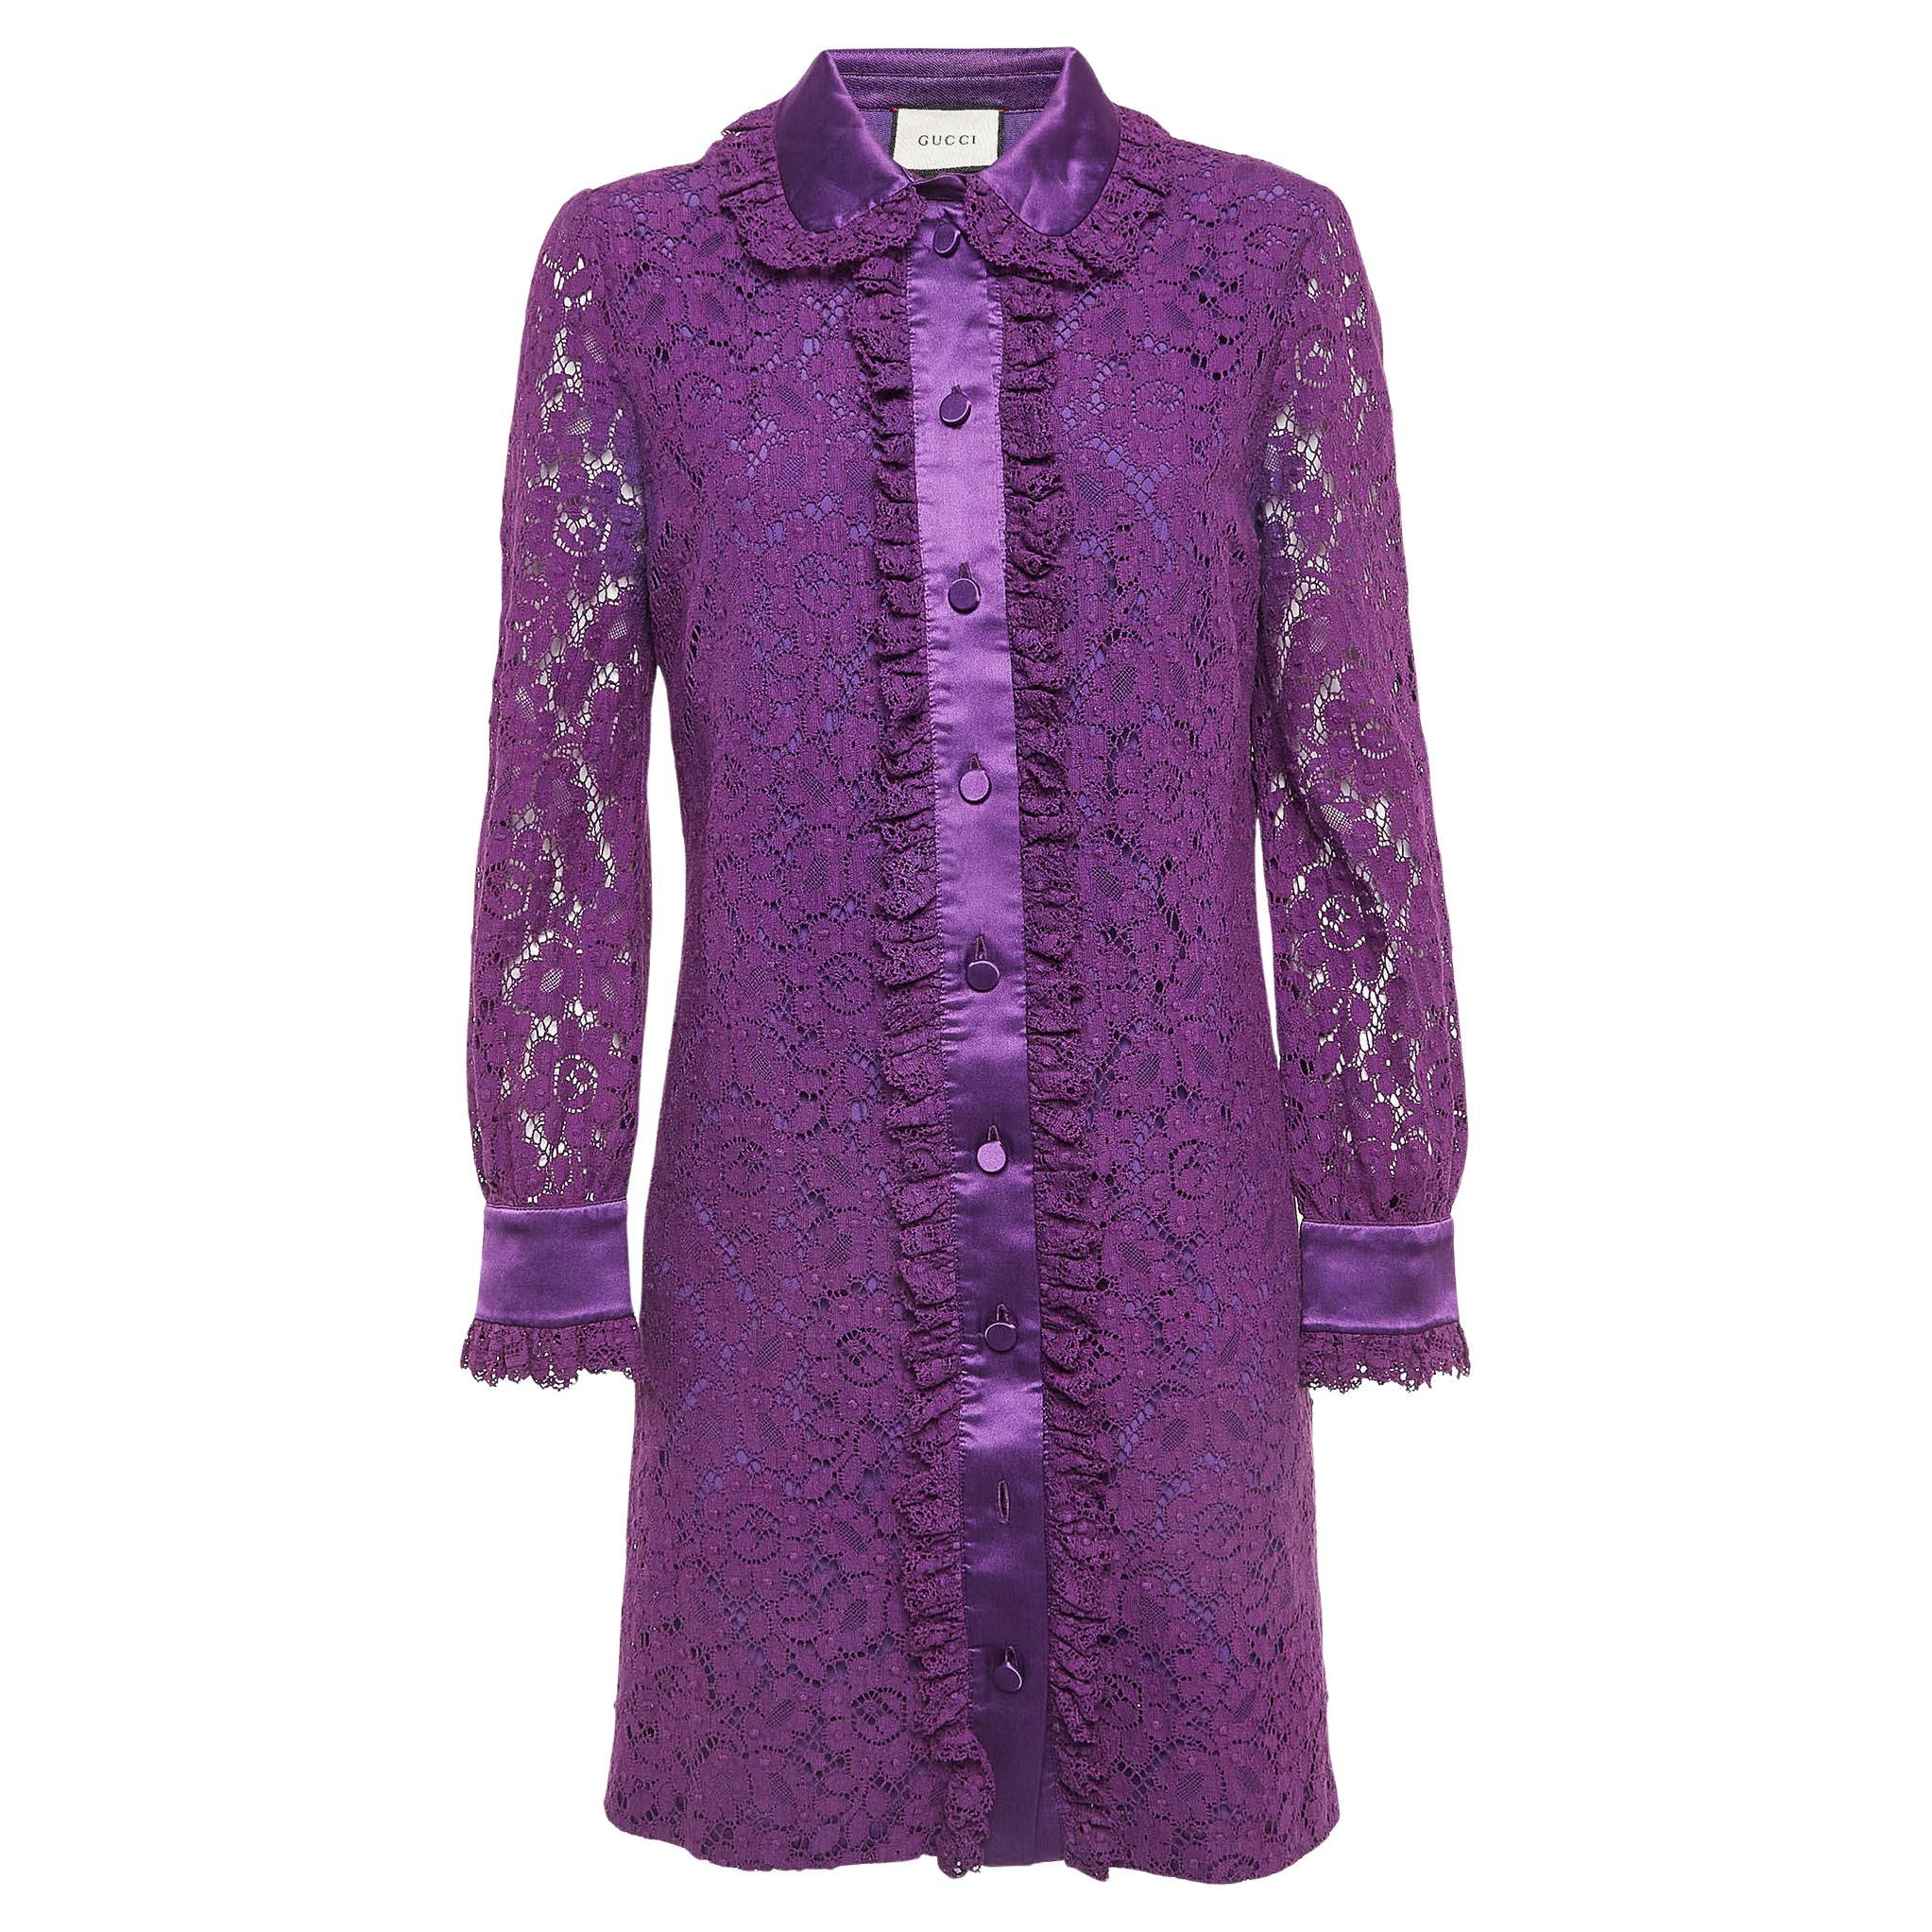 Gucci Purple Lace Satin Trimmed Shirt Dress M